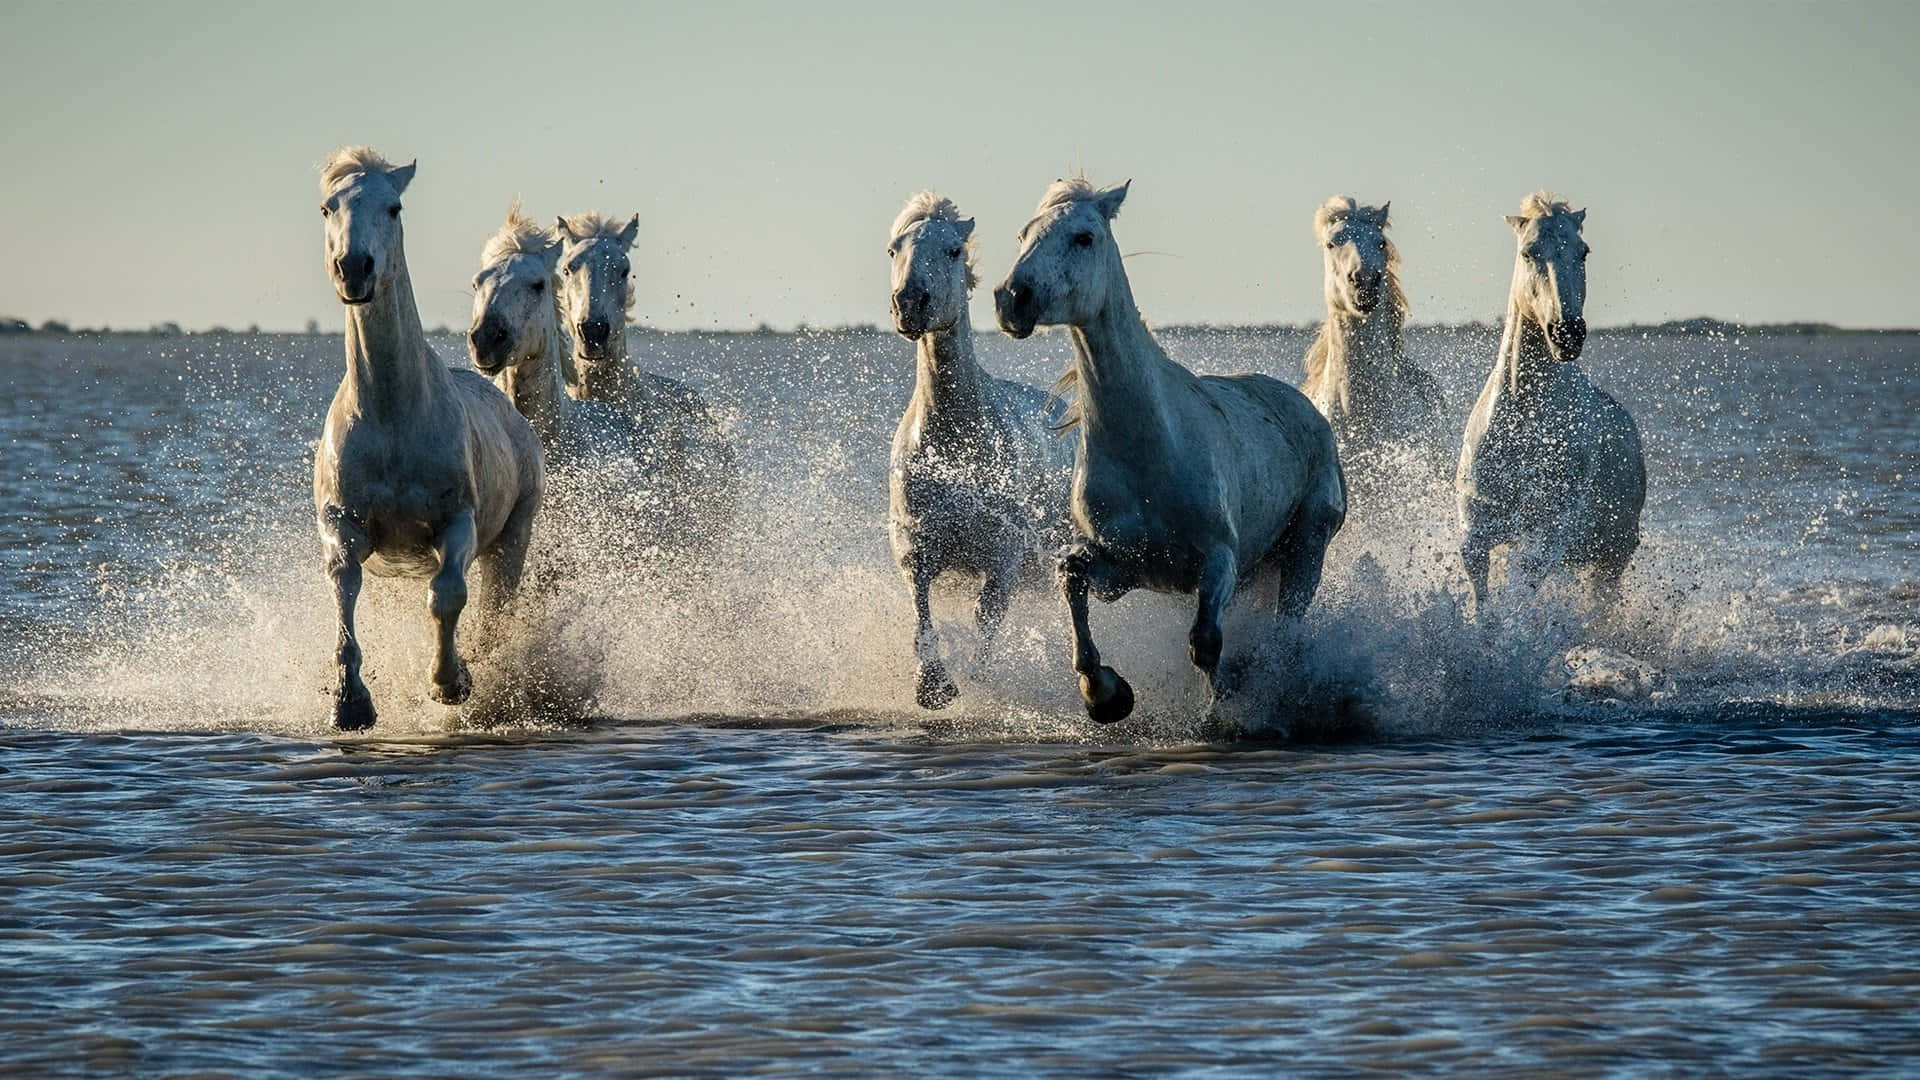 "Majestic White Horses Galloping Through Sea Water" Wallpaper